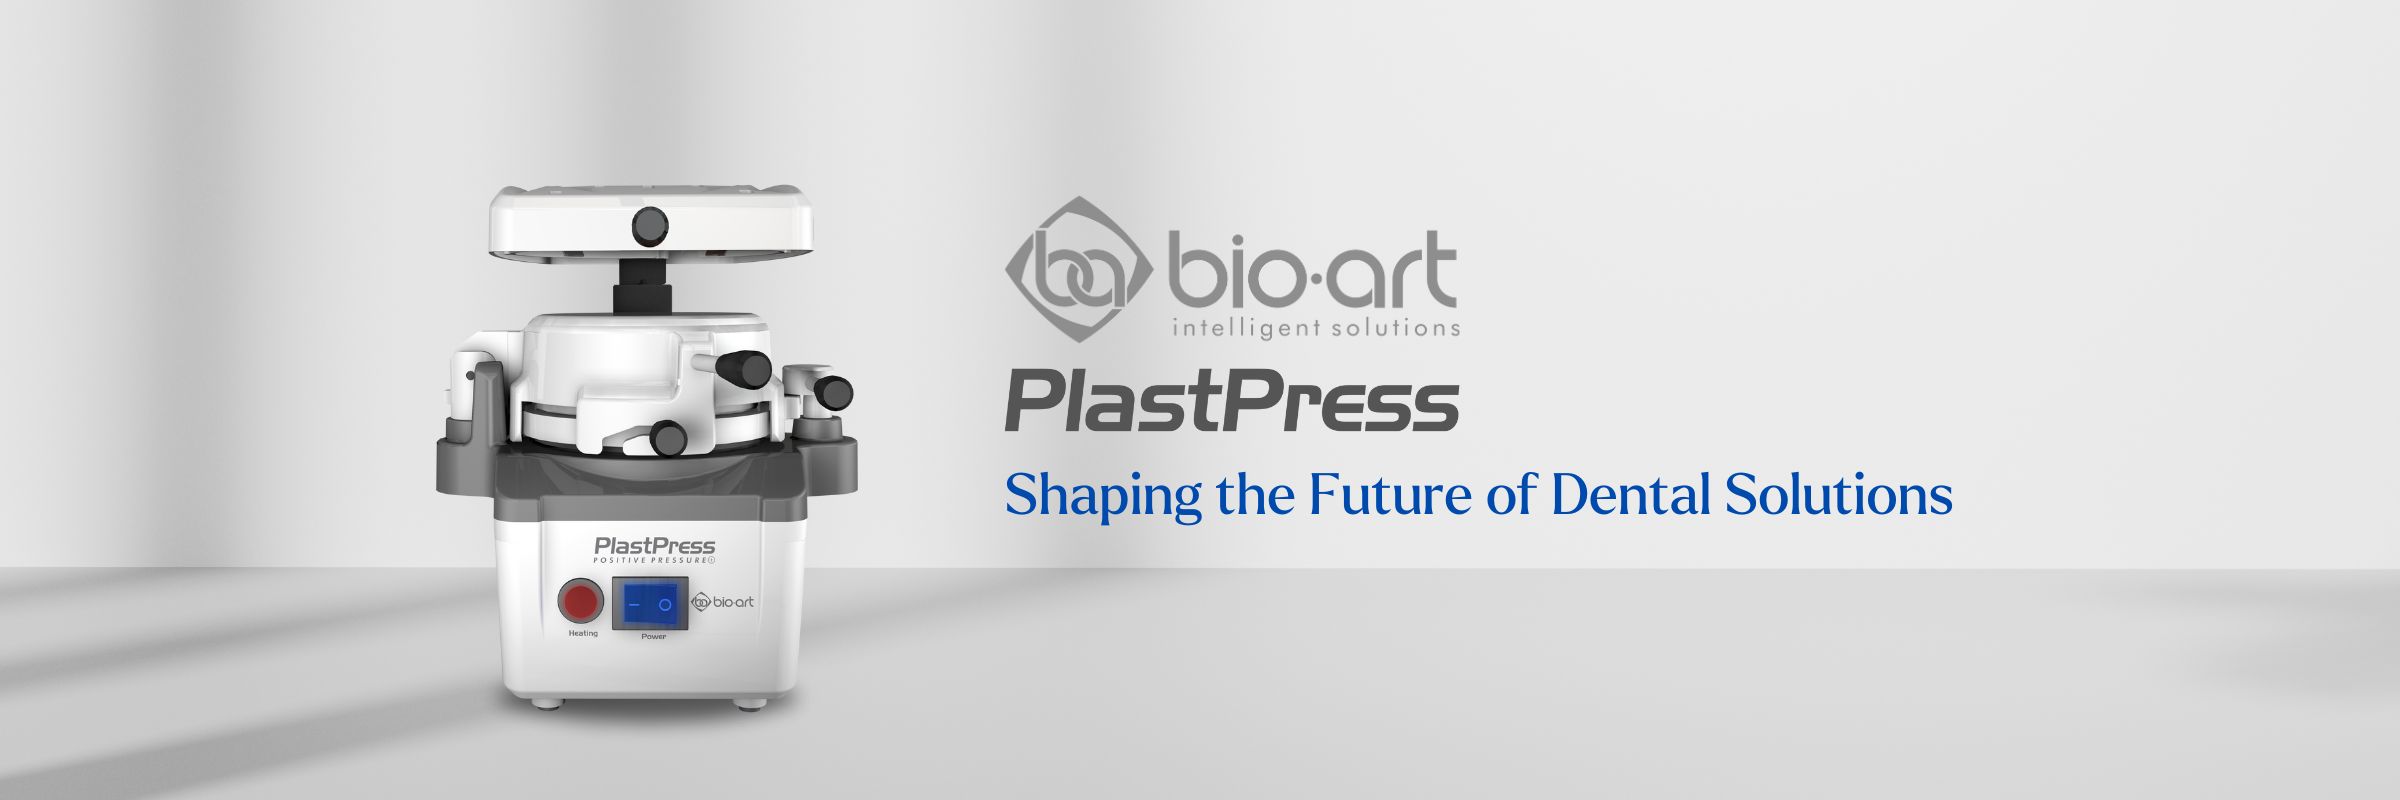 Bioart Plast Press Banner